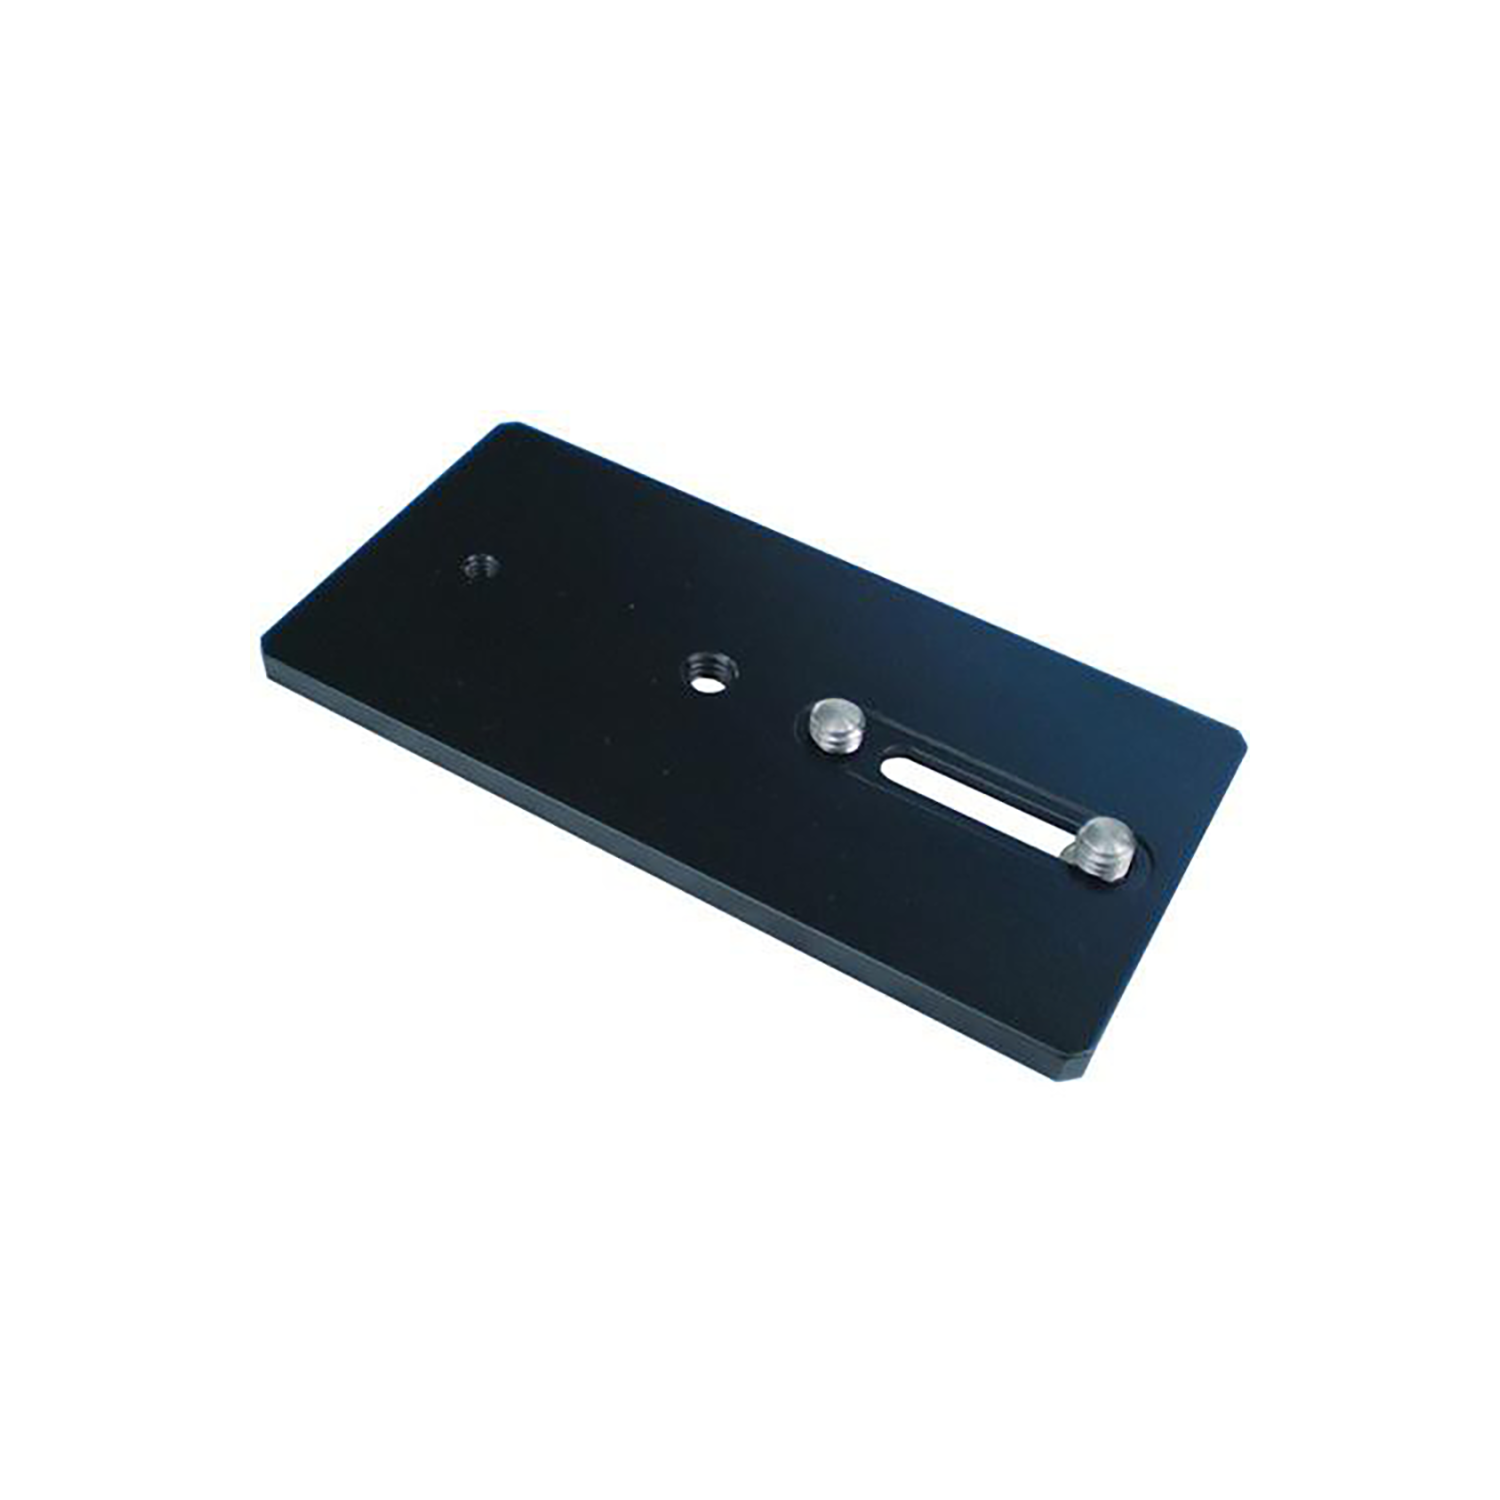 MILLER Offset Camera Plate (2 x 3/8" screws) for additional offset camera payloads to suit Camera Plates (860 & 1060)